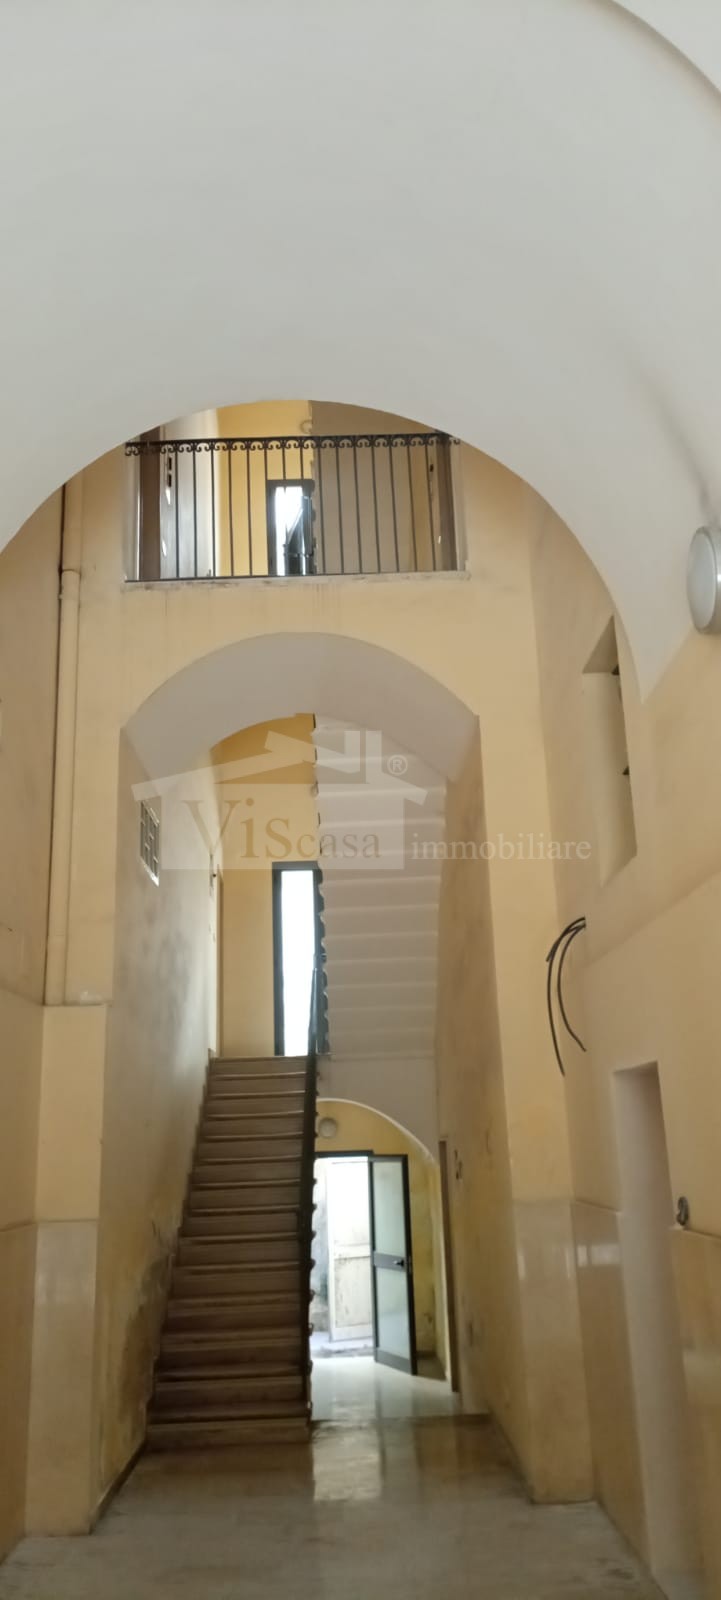 Bari – Monovano San Pasquale